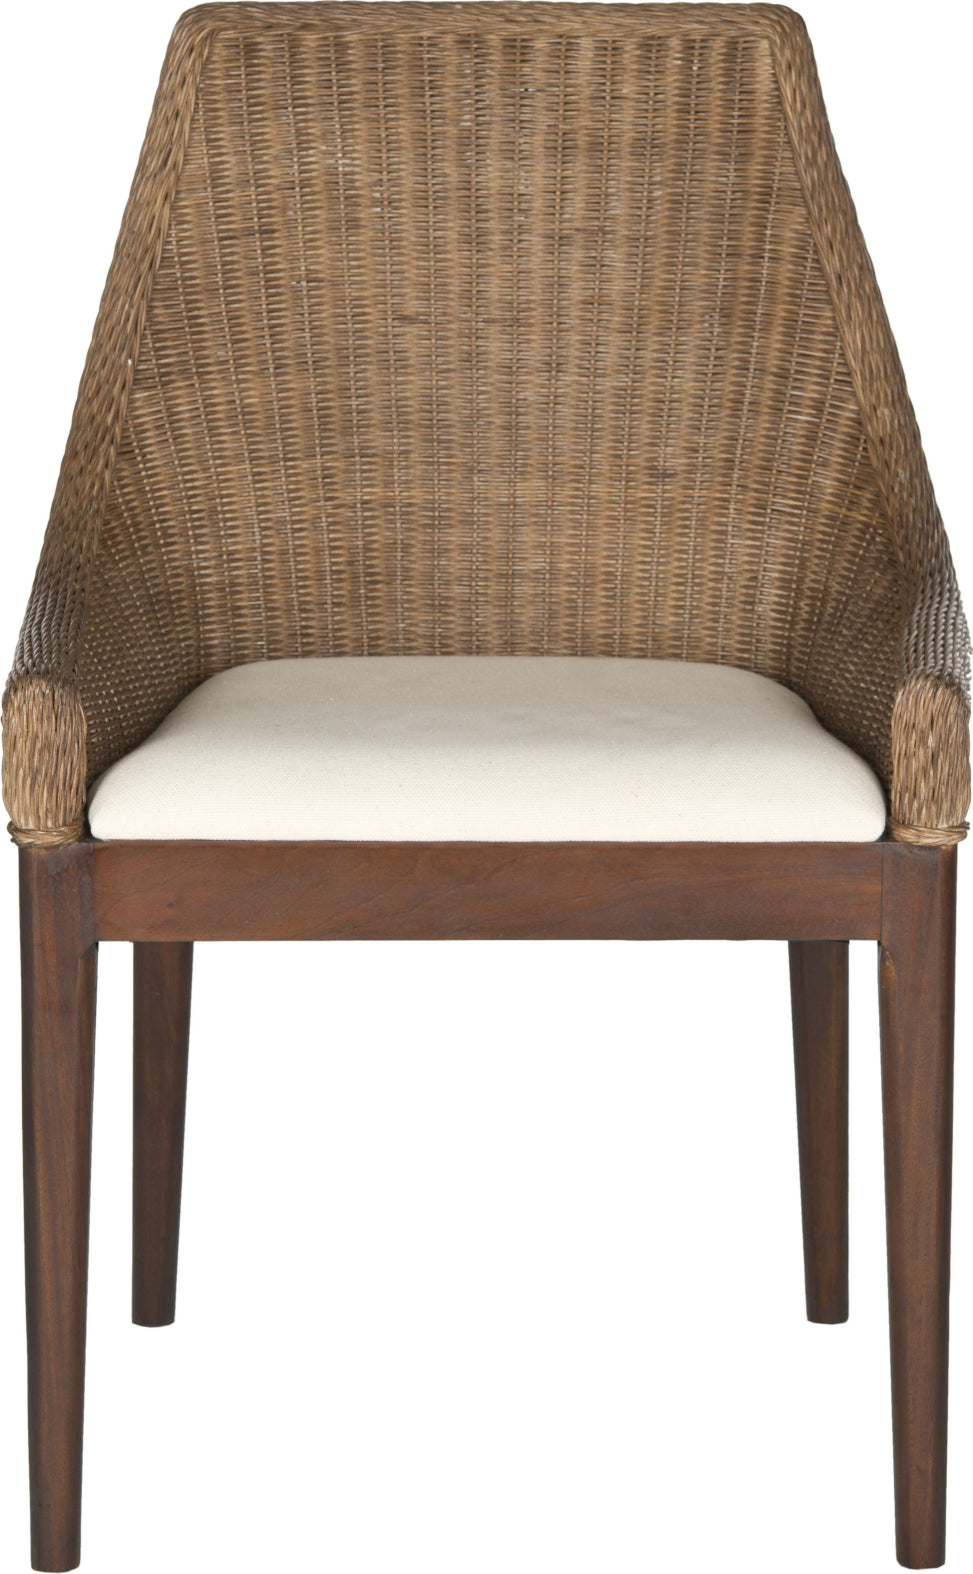 Safavieh Franco Rattan Sloping Chair Brown Furniture main image